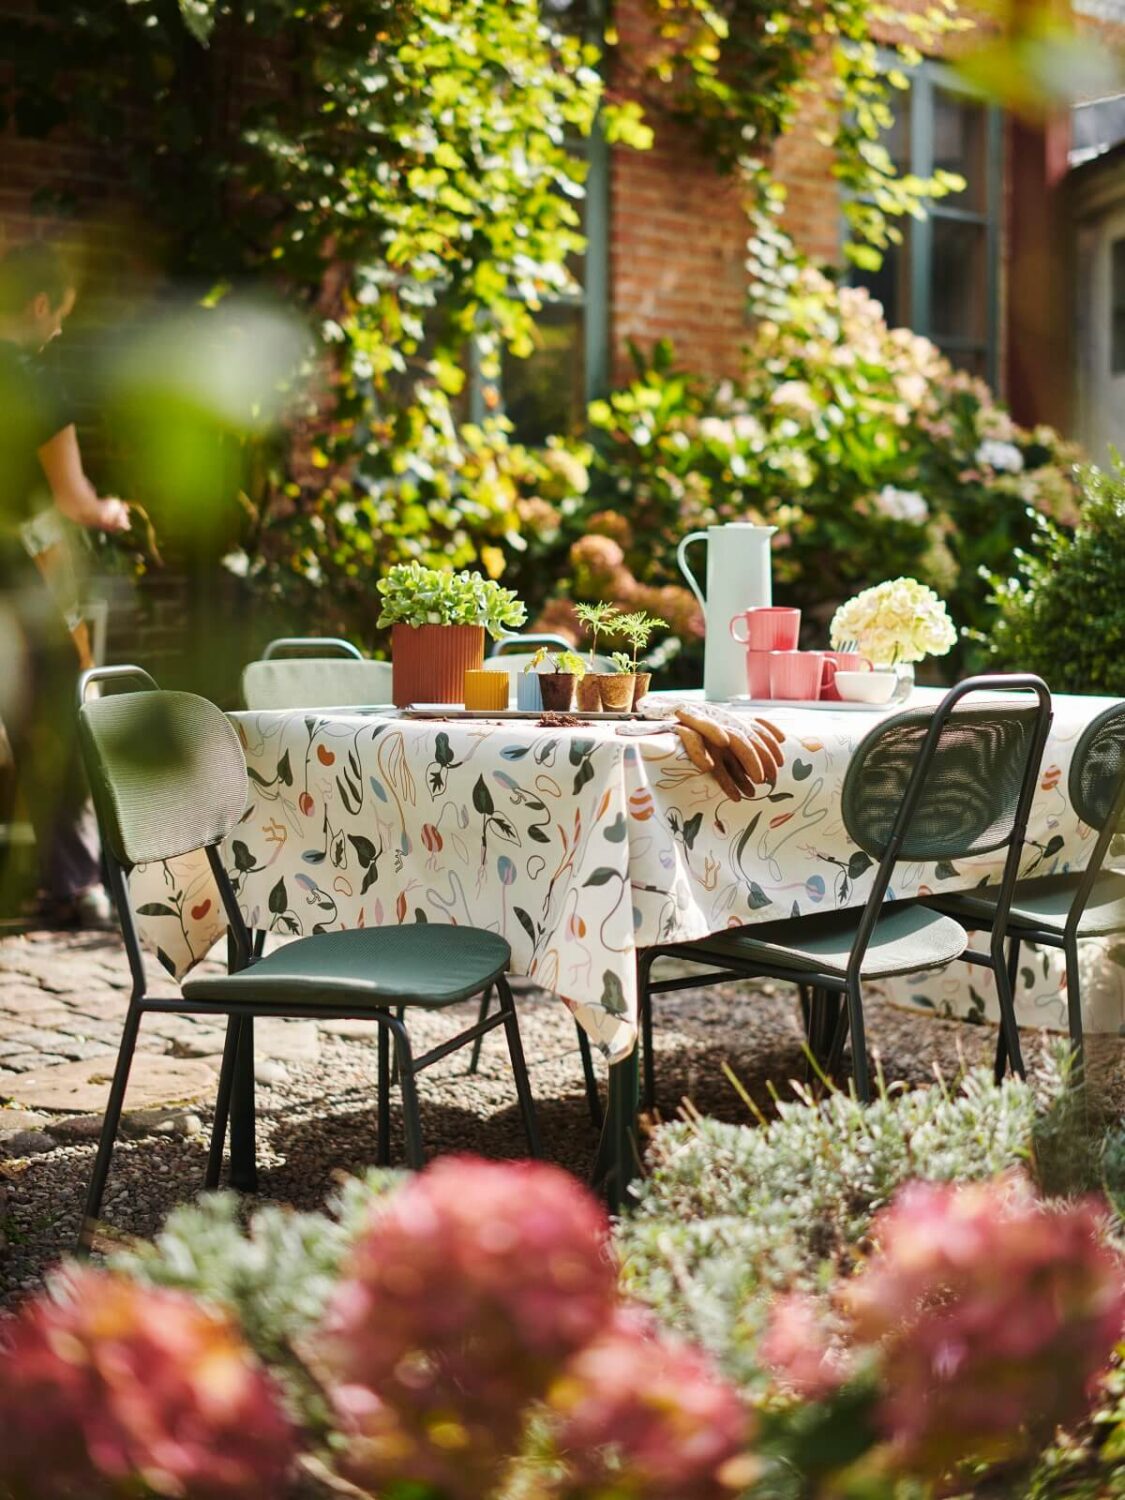 ikea-daksjus-new-collection-outdoor-dining-table-nordroom